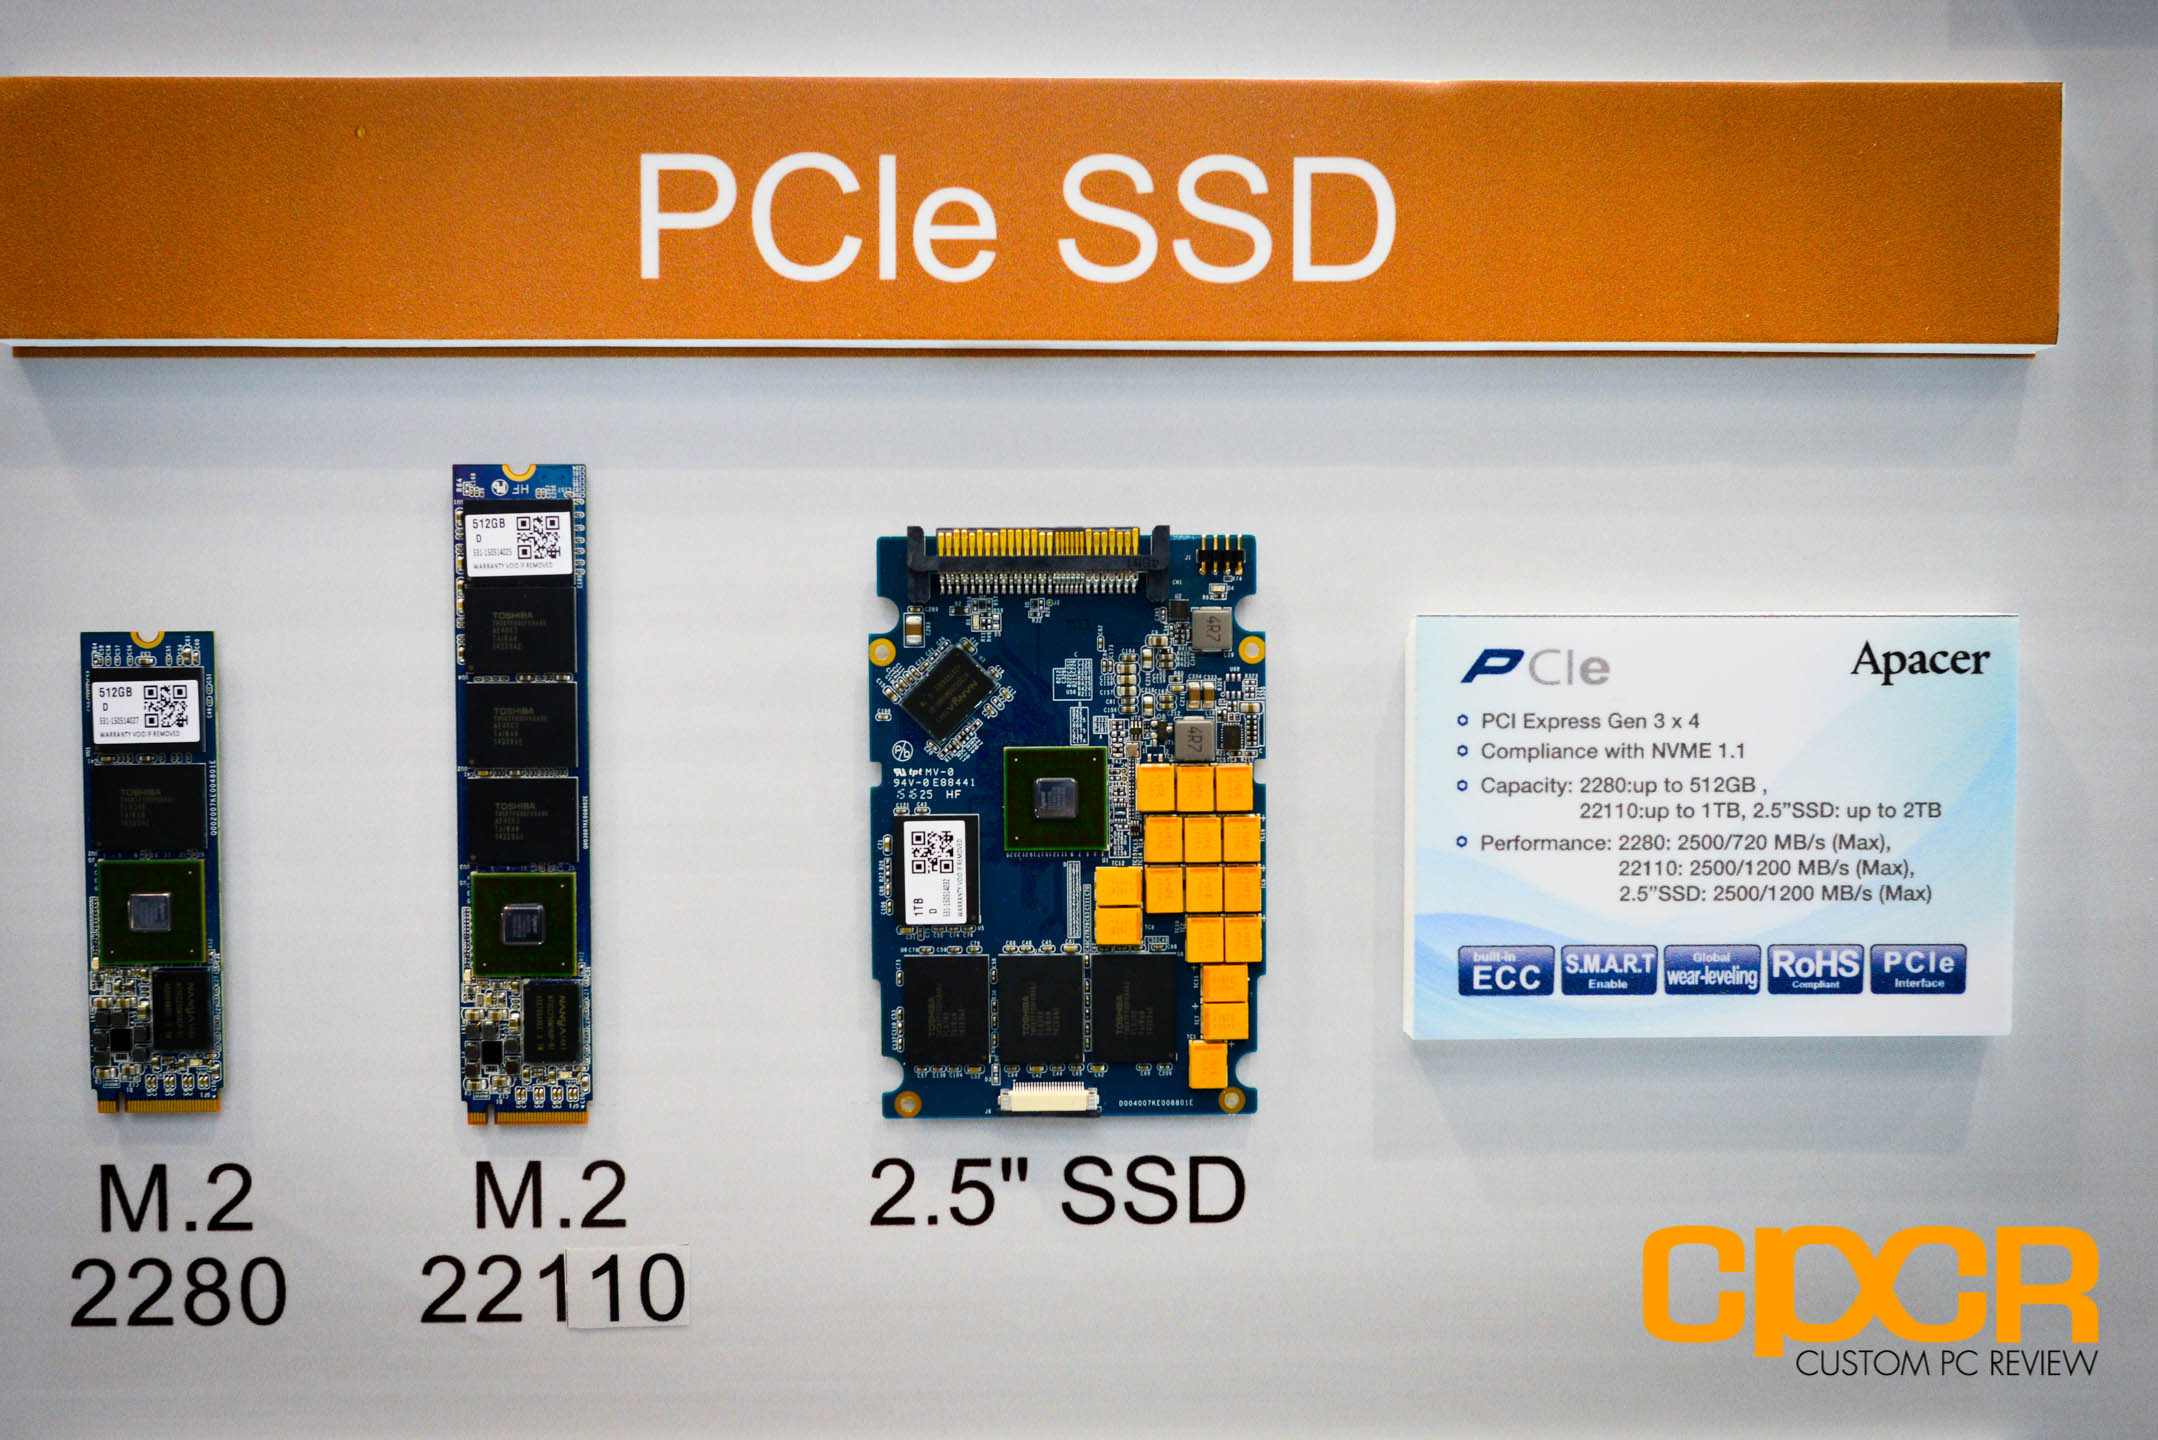 Computex 2015: Apacer Displays PCIe Gen 3 x4 NVMe SSDs - Custom PC Review